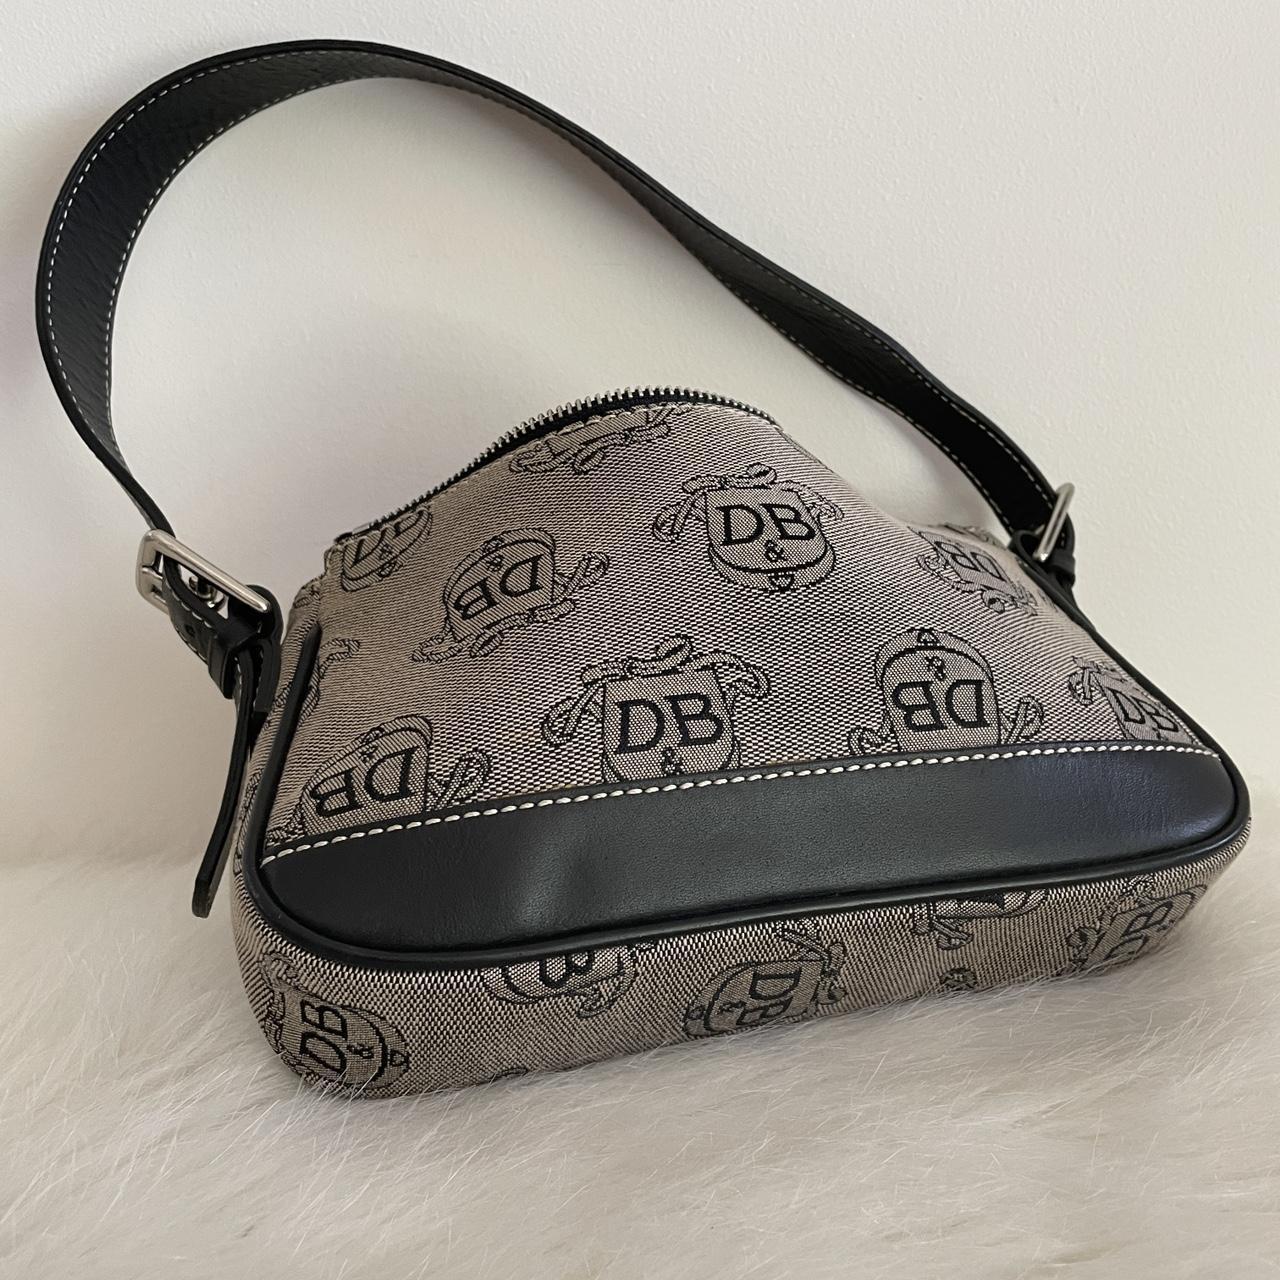 New York & Company Y2K shoulder bag!!!! In amazing - Depop